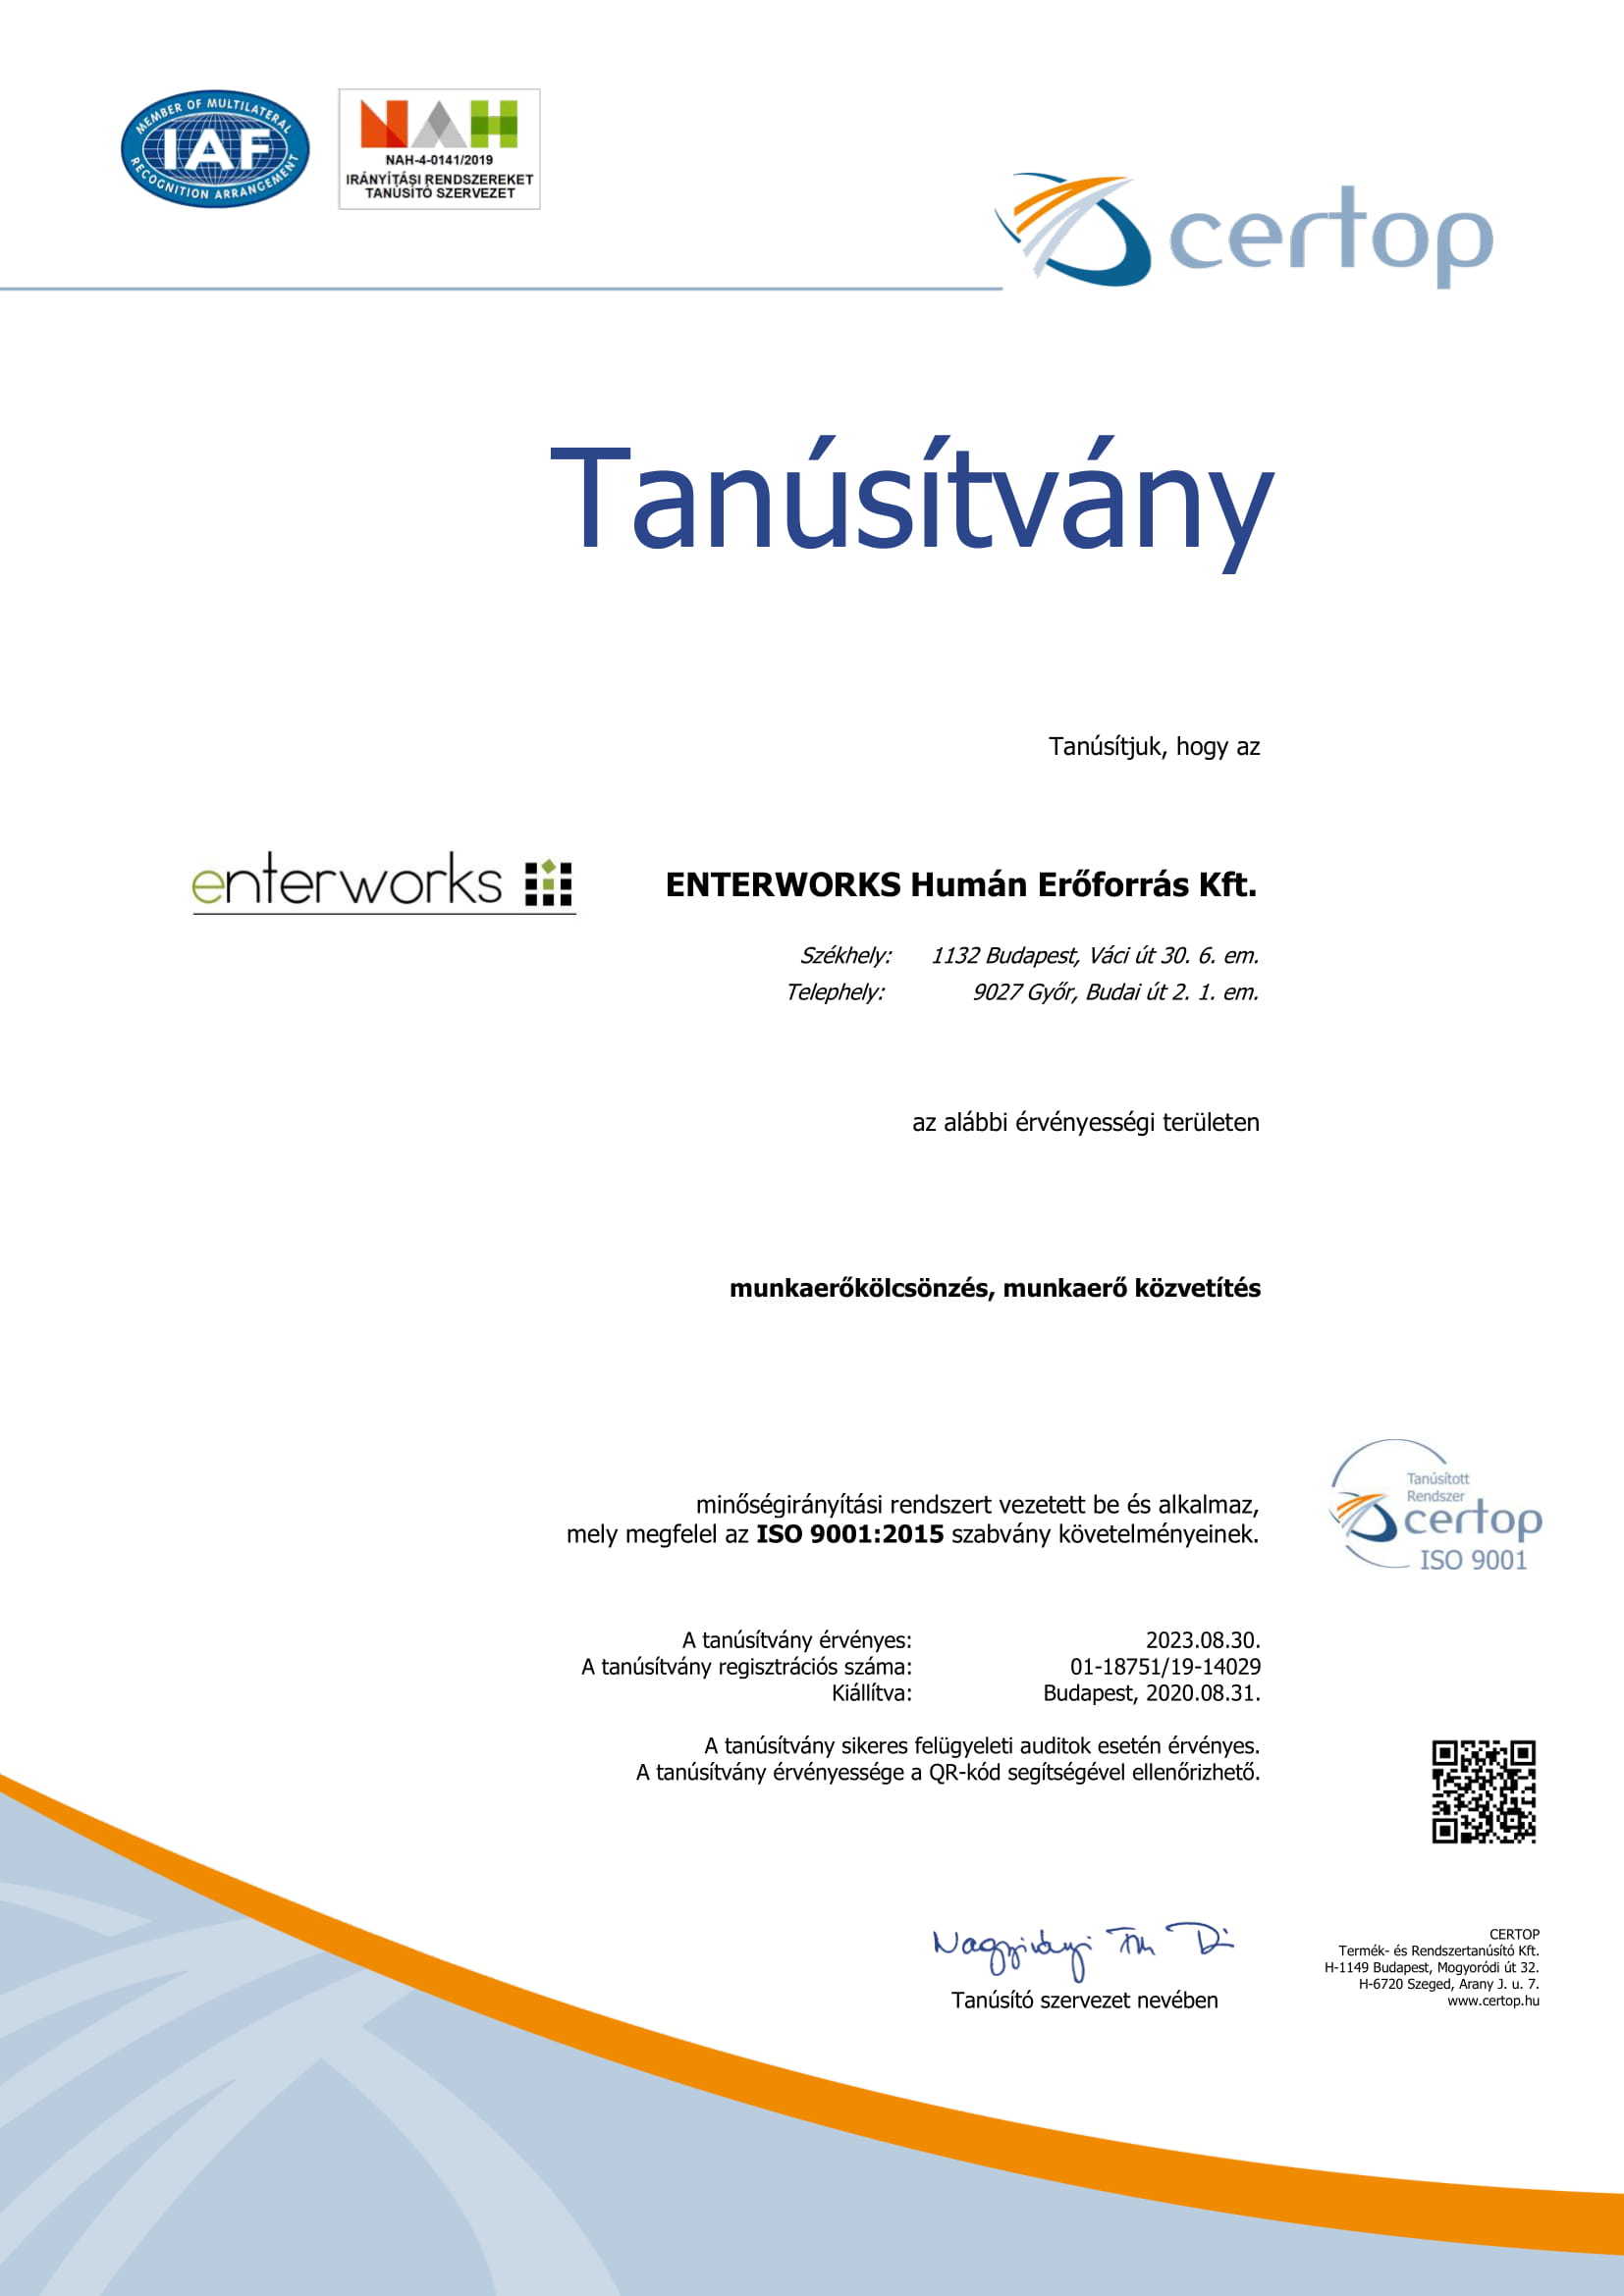 Tanusitvany HU18751 19 ISO 9001 2015 magyar 2020 08 31 1